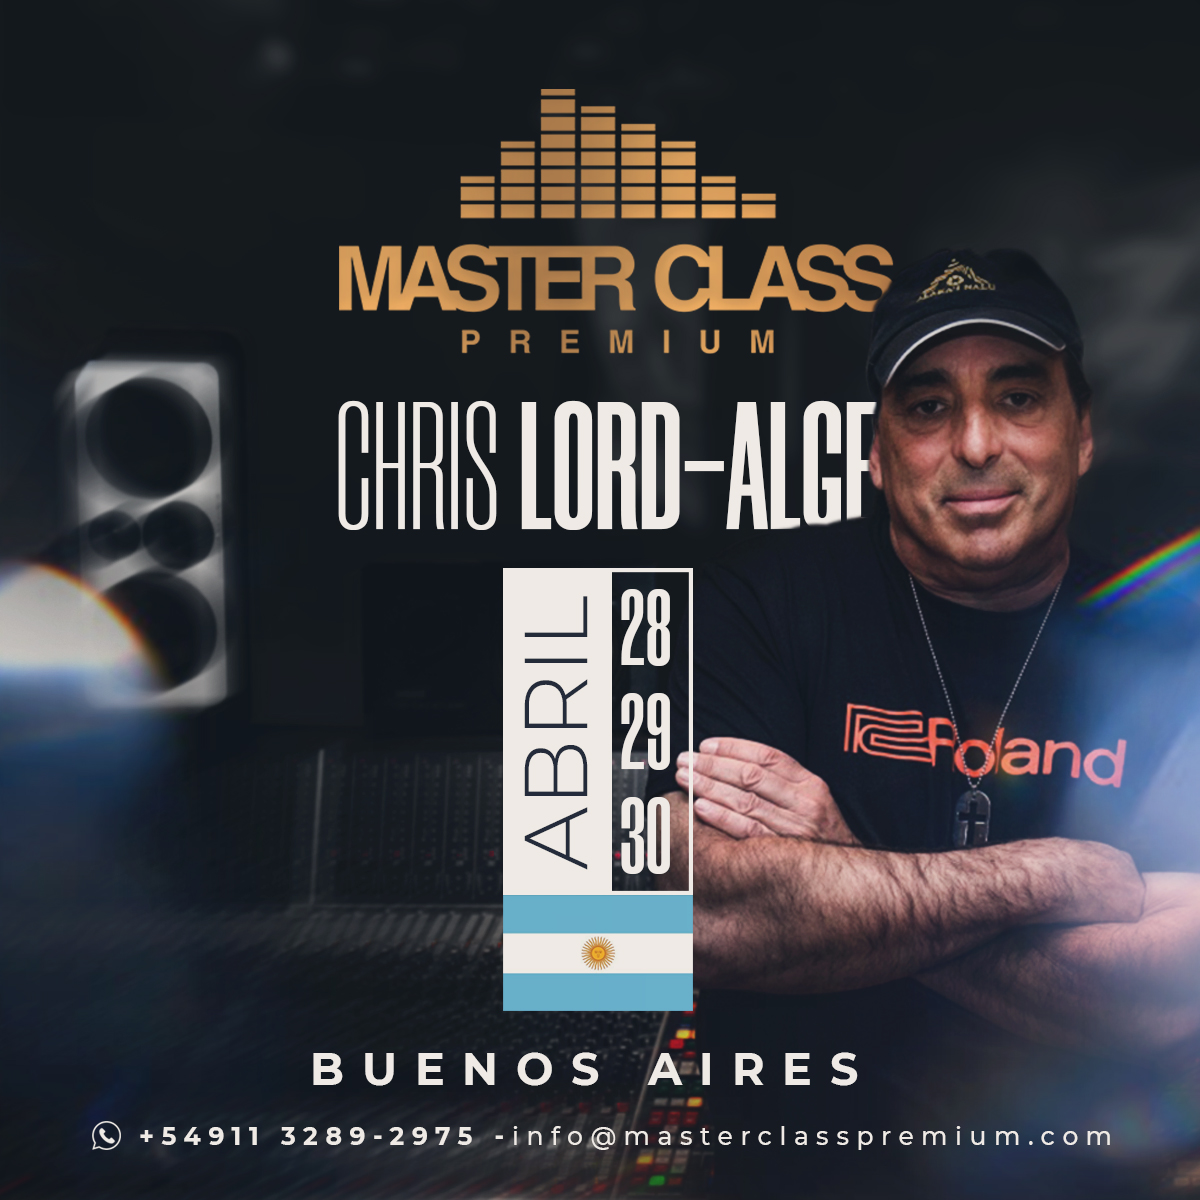 Chris Lord-Alge